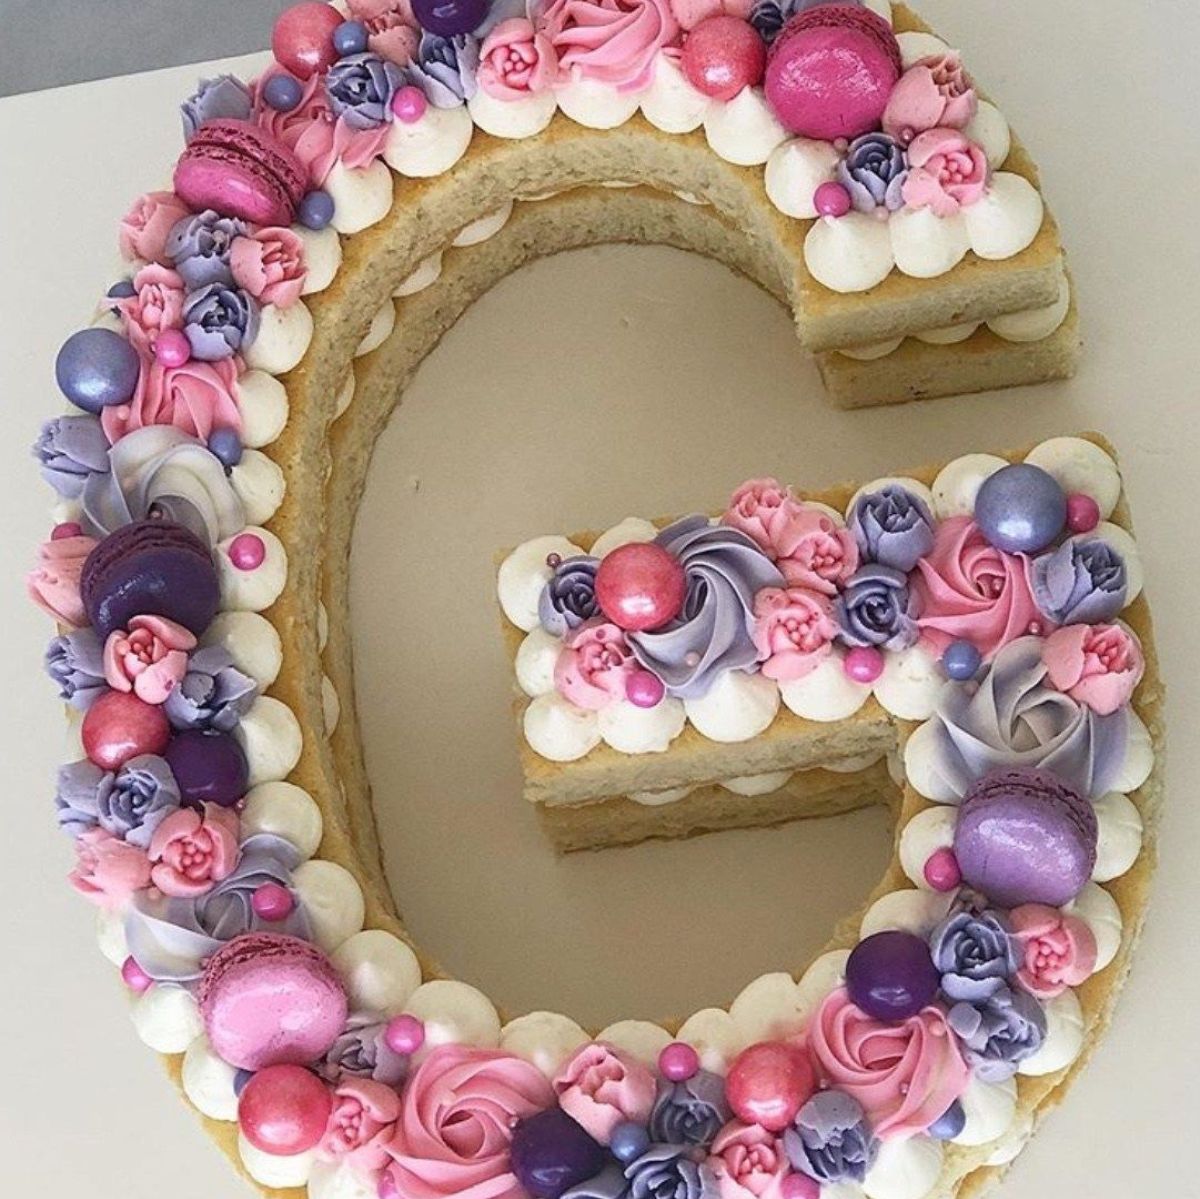 Wedding cake baker helps couples celebrate during coronavirus pandemic with  fake cakes - ABC News